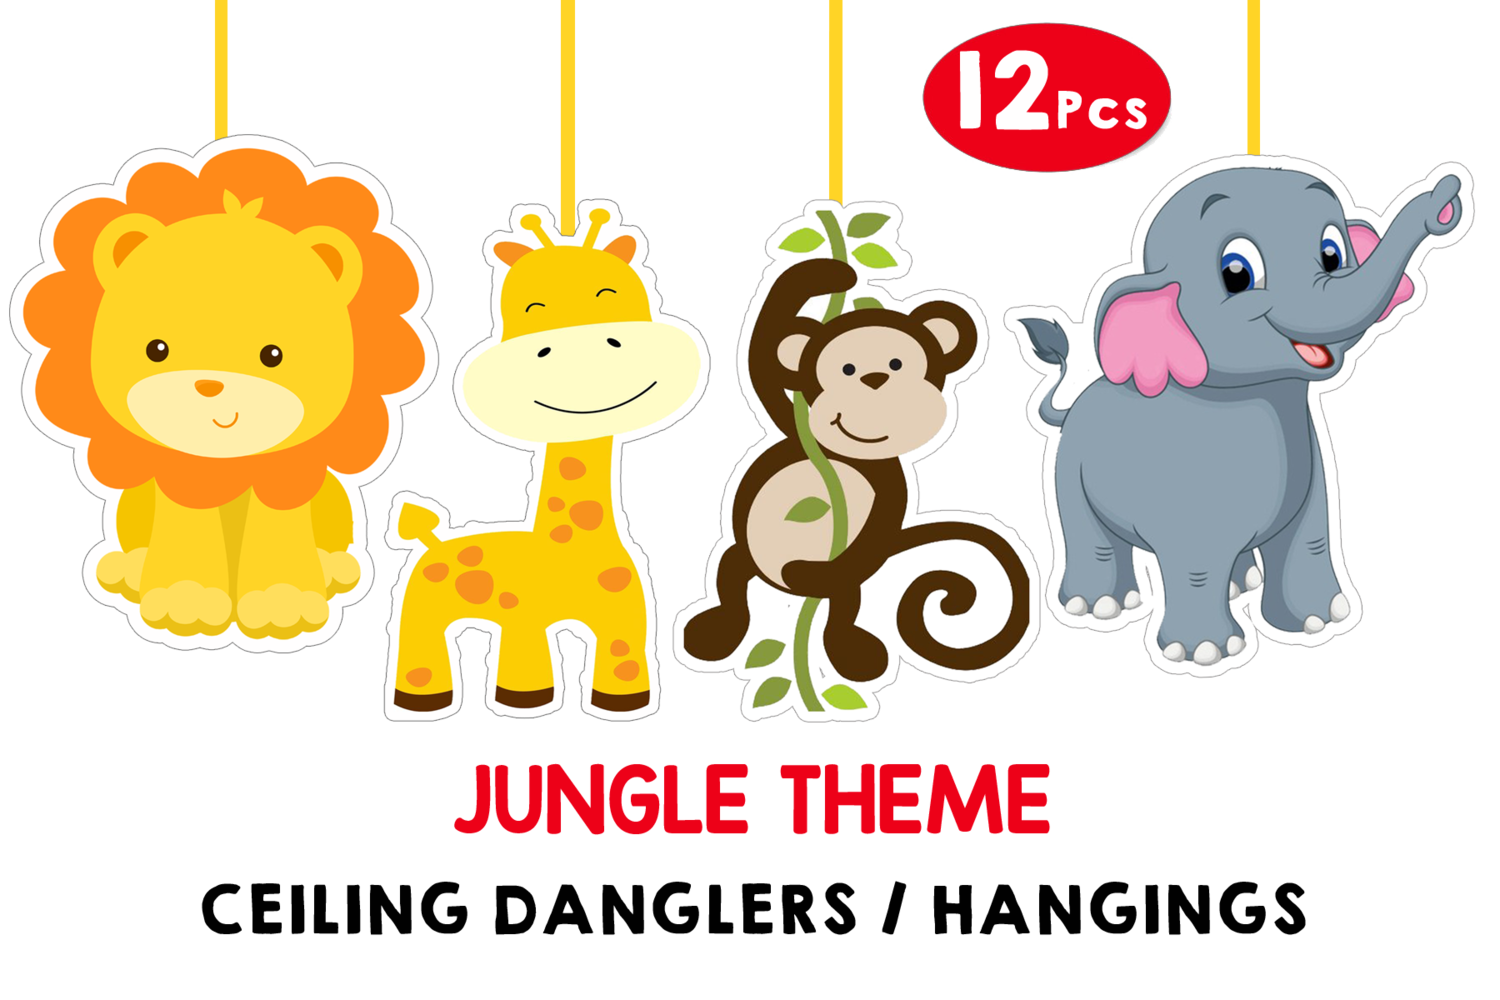 Jungle Theme Hangings / Danglers #2 (12 Pcs)